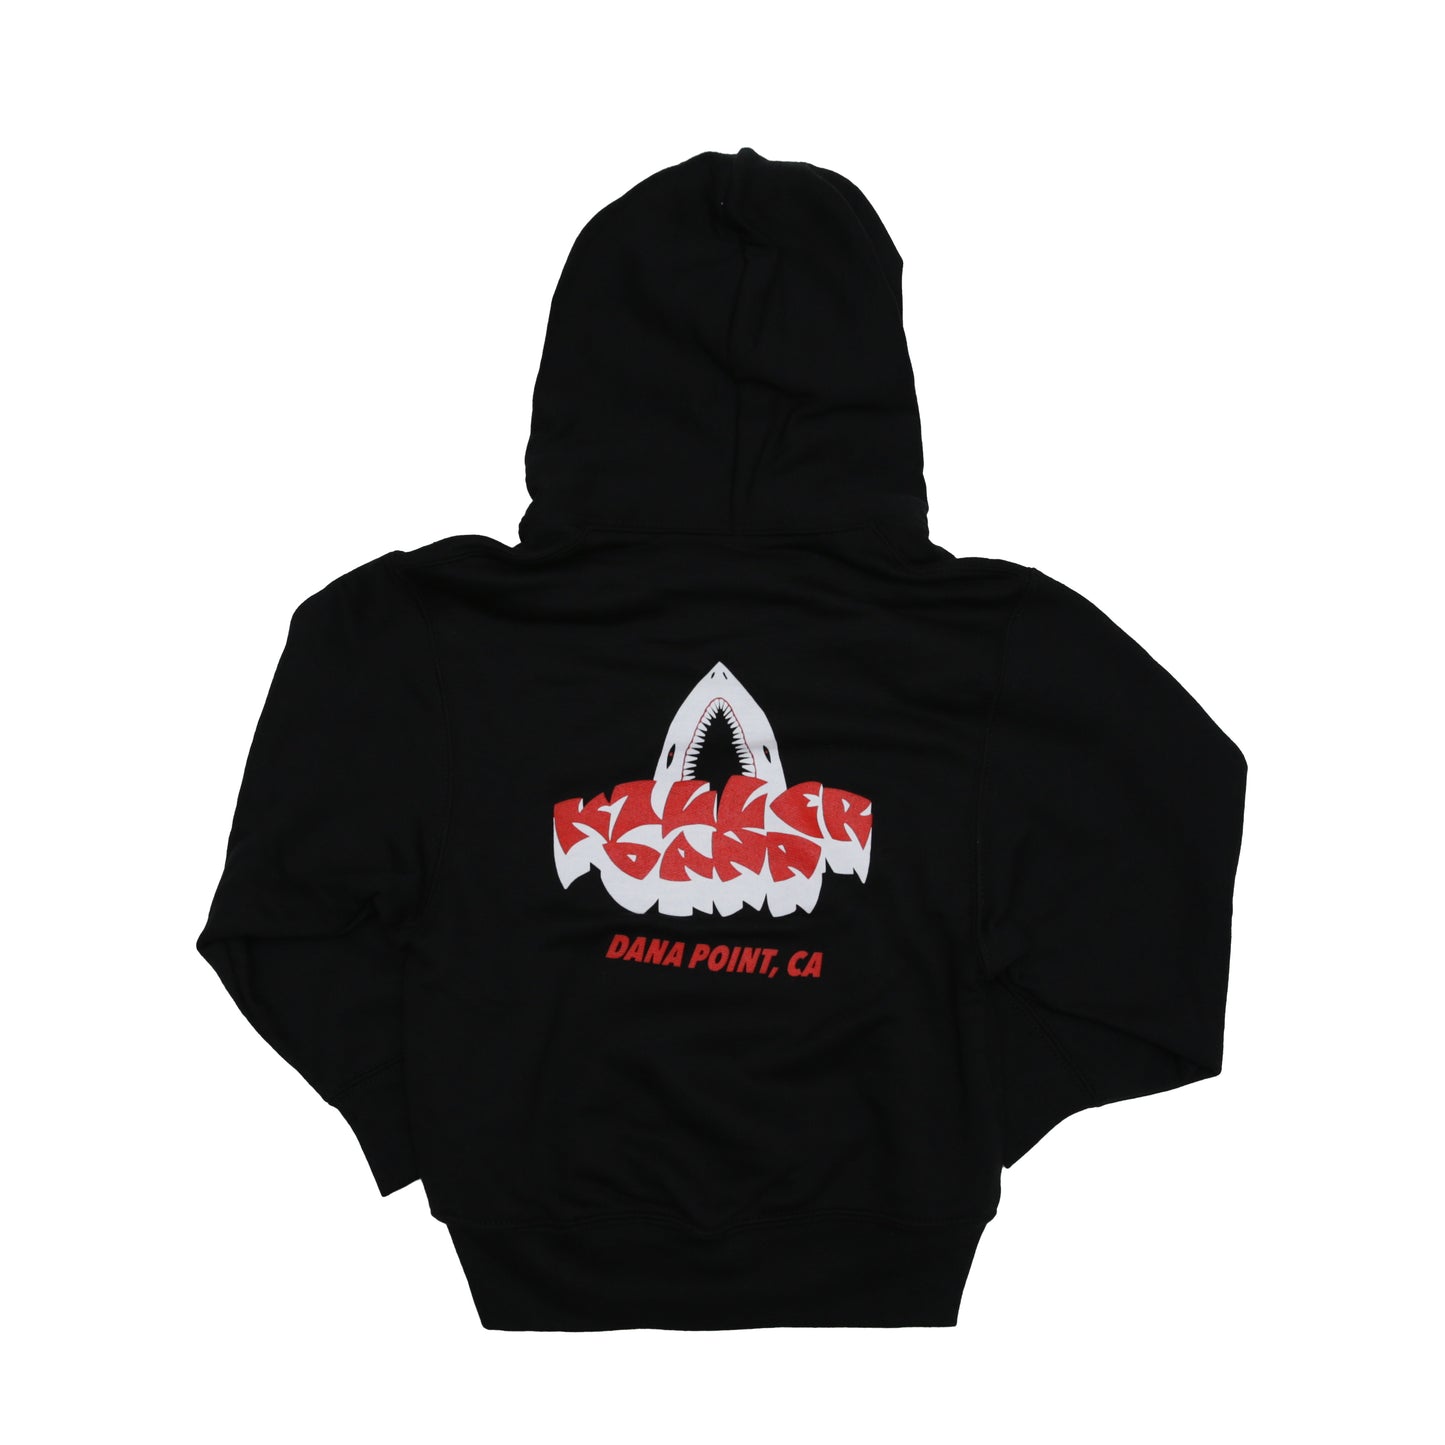 Killer Dana Mick Muncha youth hoodie